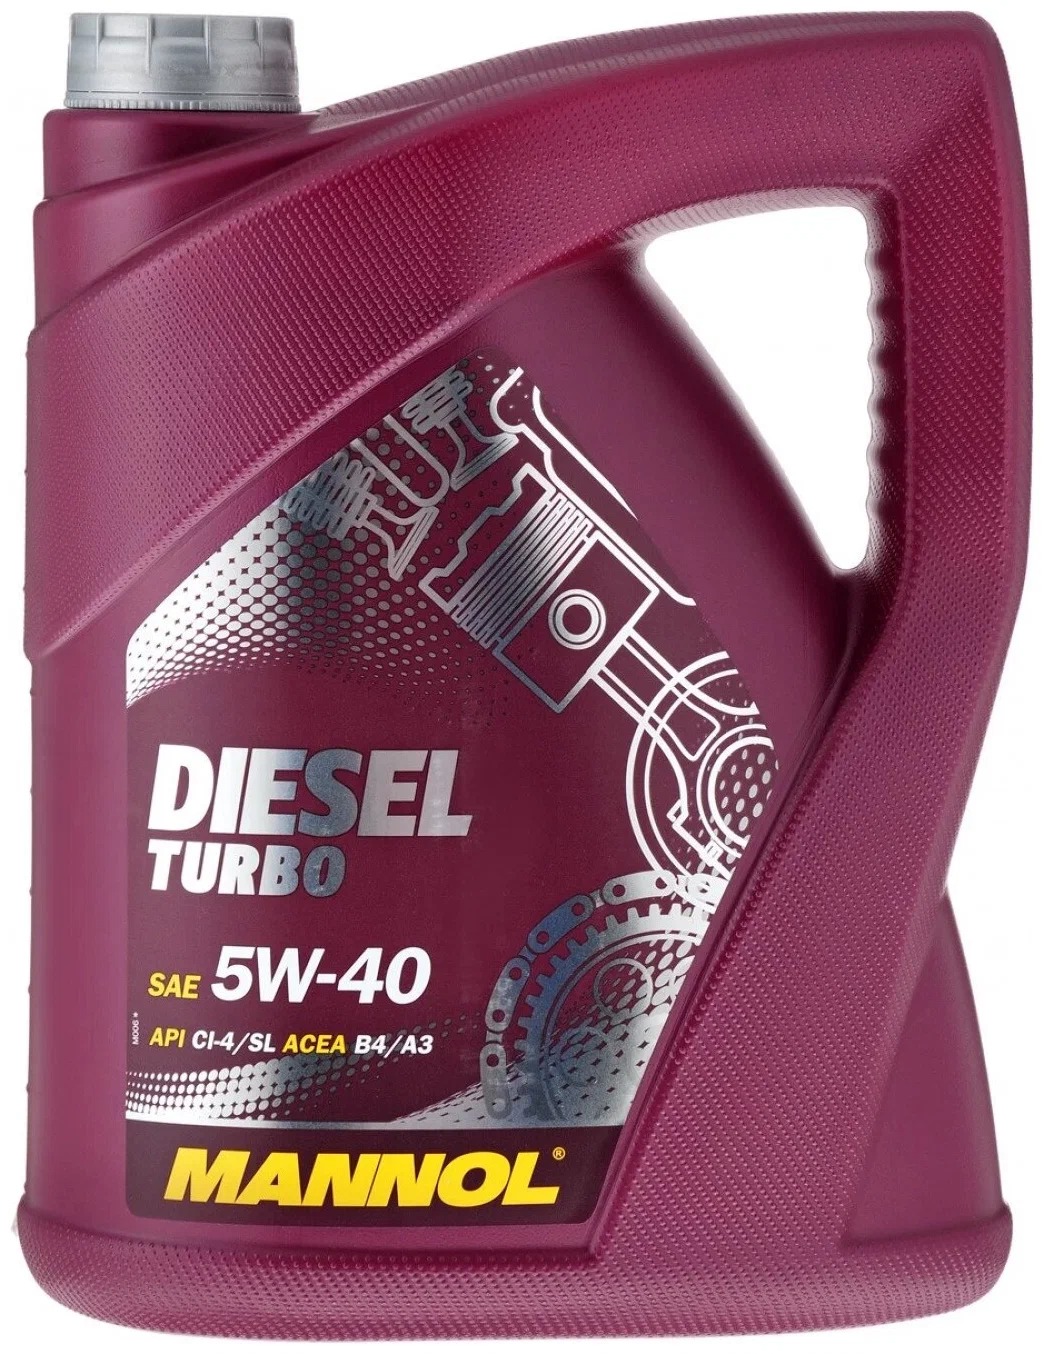 Моторное масло для дизеля с турбиной. Mannol 5w40 Diesel Turbo 5л. Diesel Turbo 5w-40 Манол. Масло Mannol Diesel Turbo 5w-40 5л. Mannol Diesel Turbo 5w40 10 л.